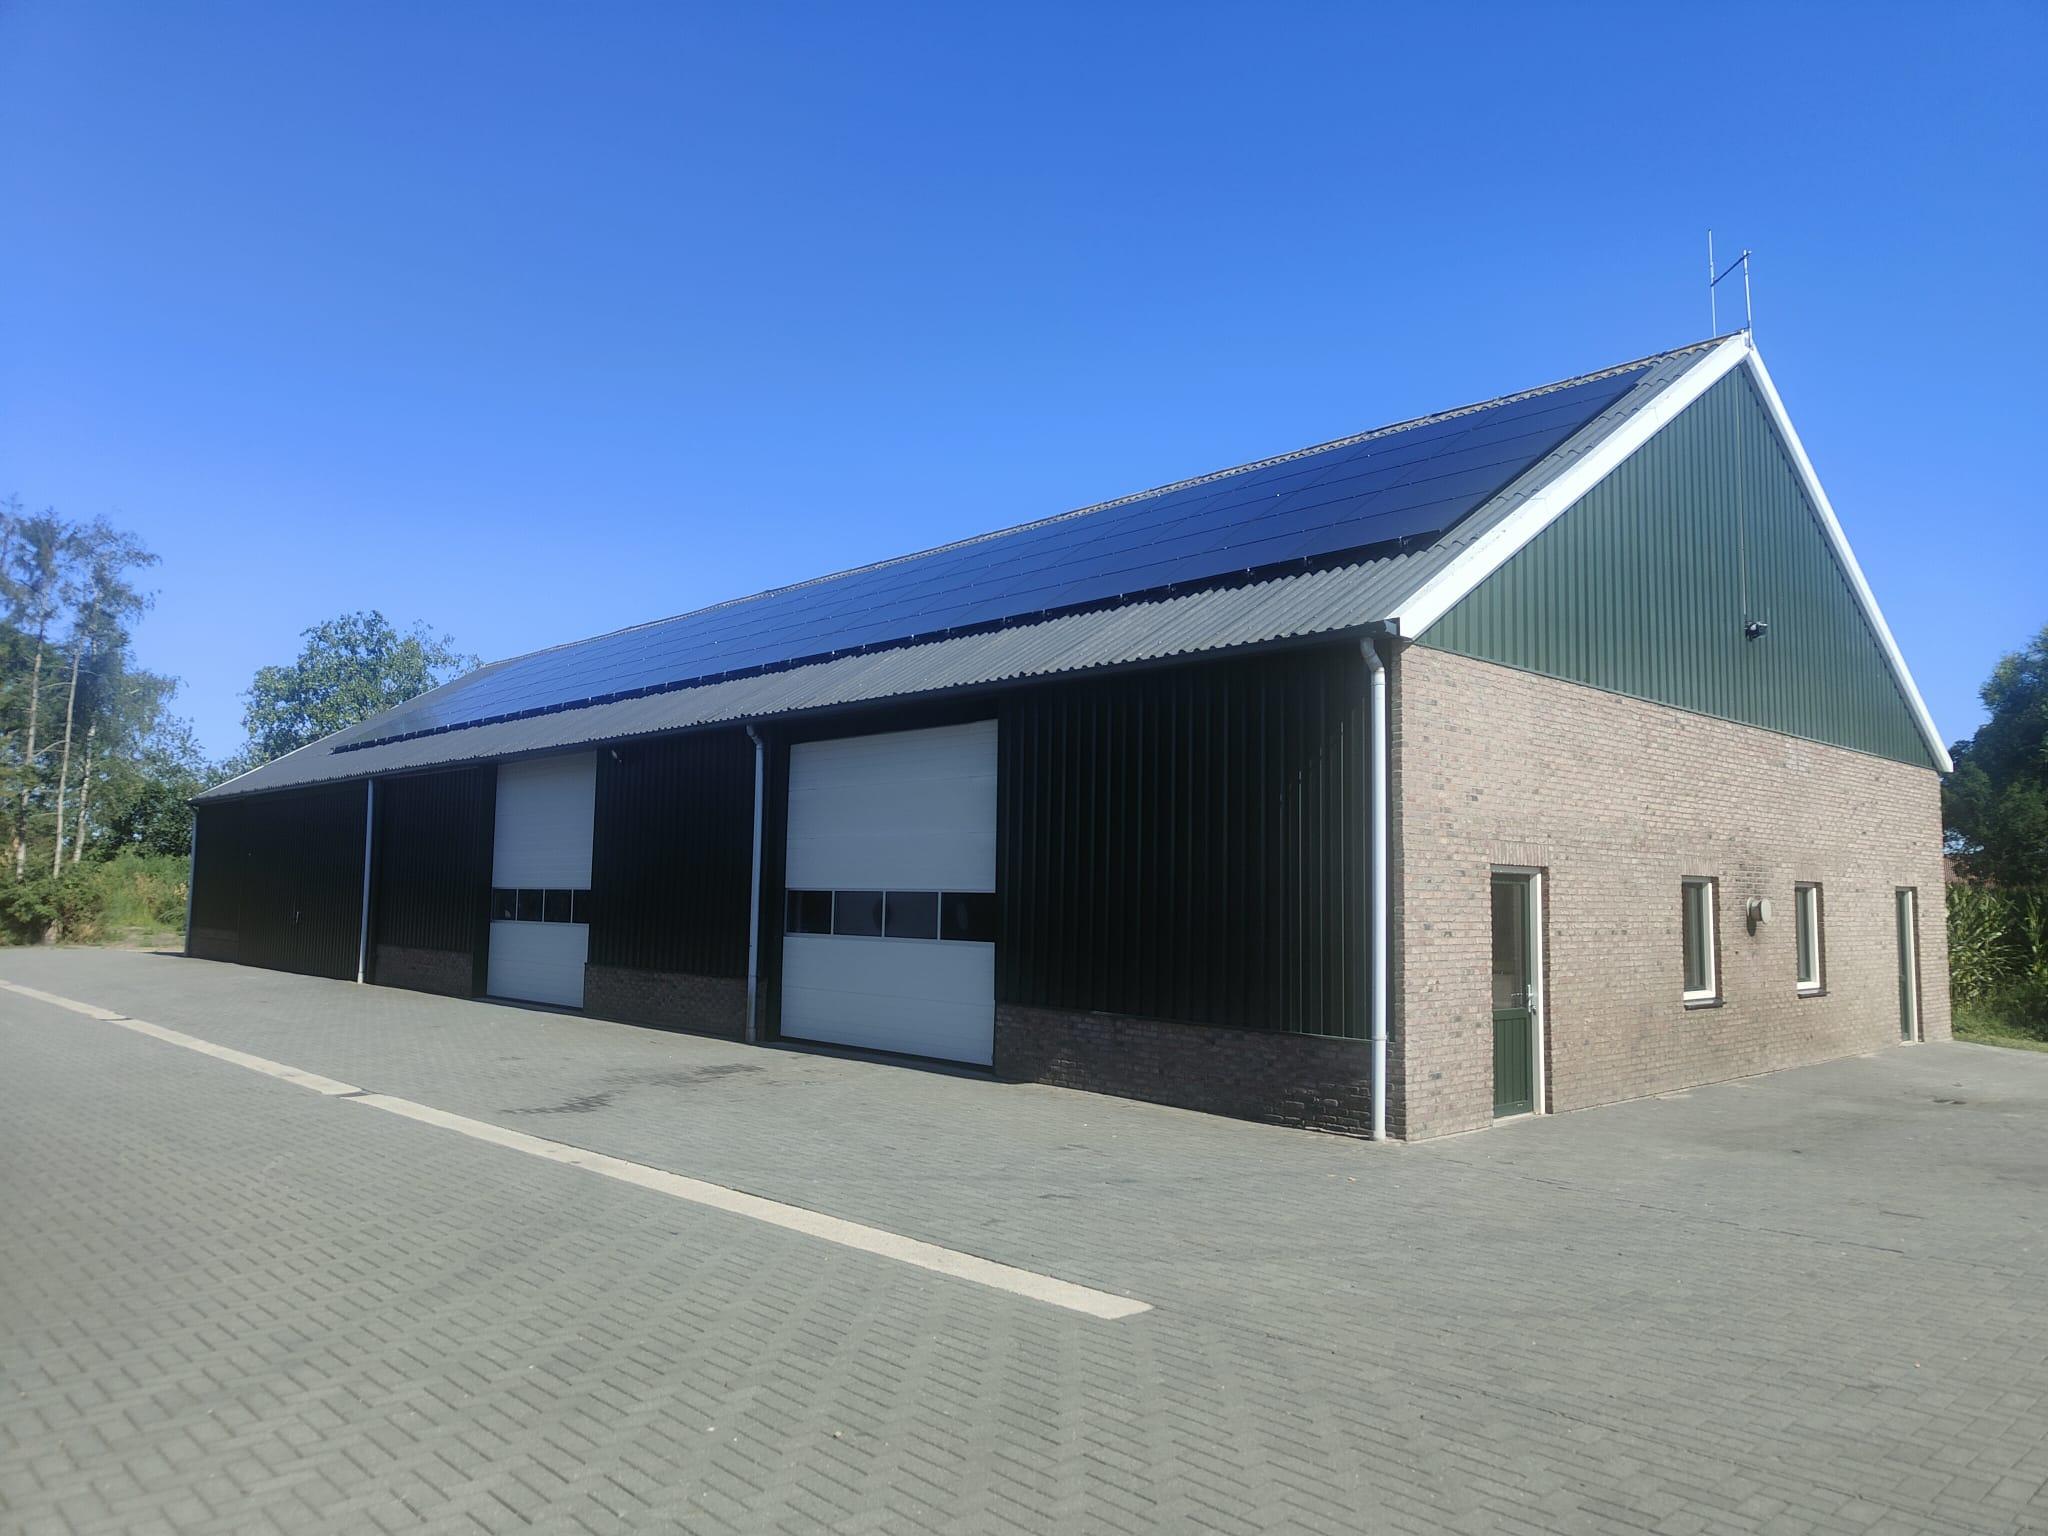 Barn with solar panels